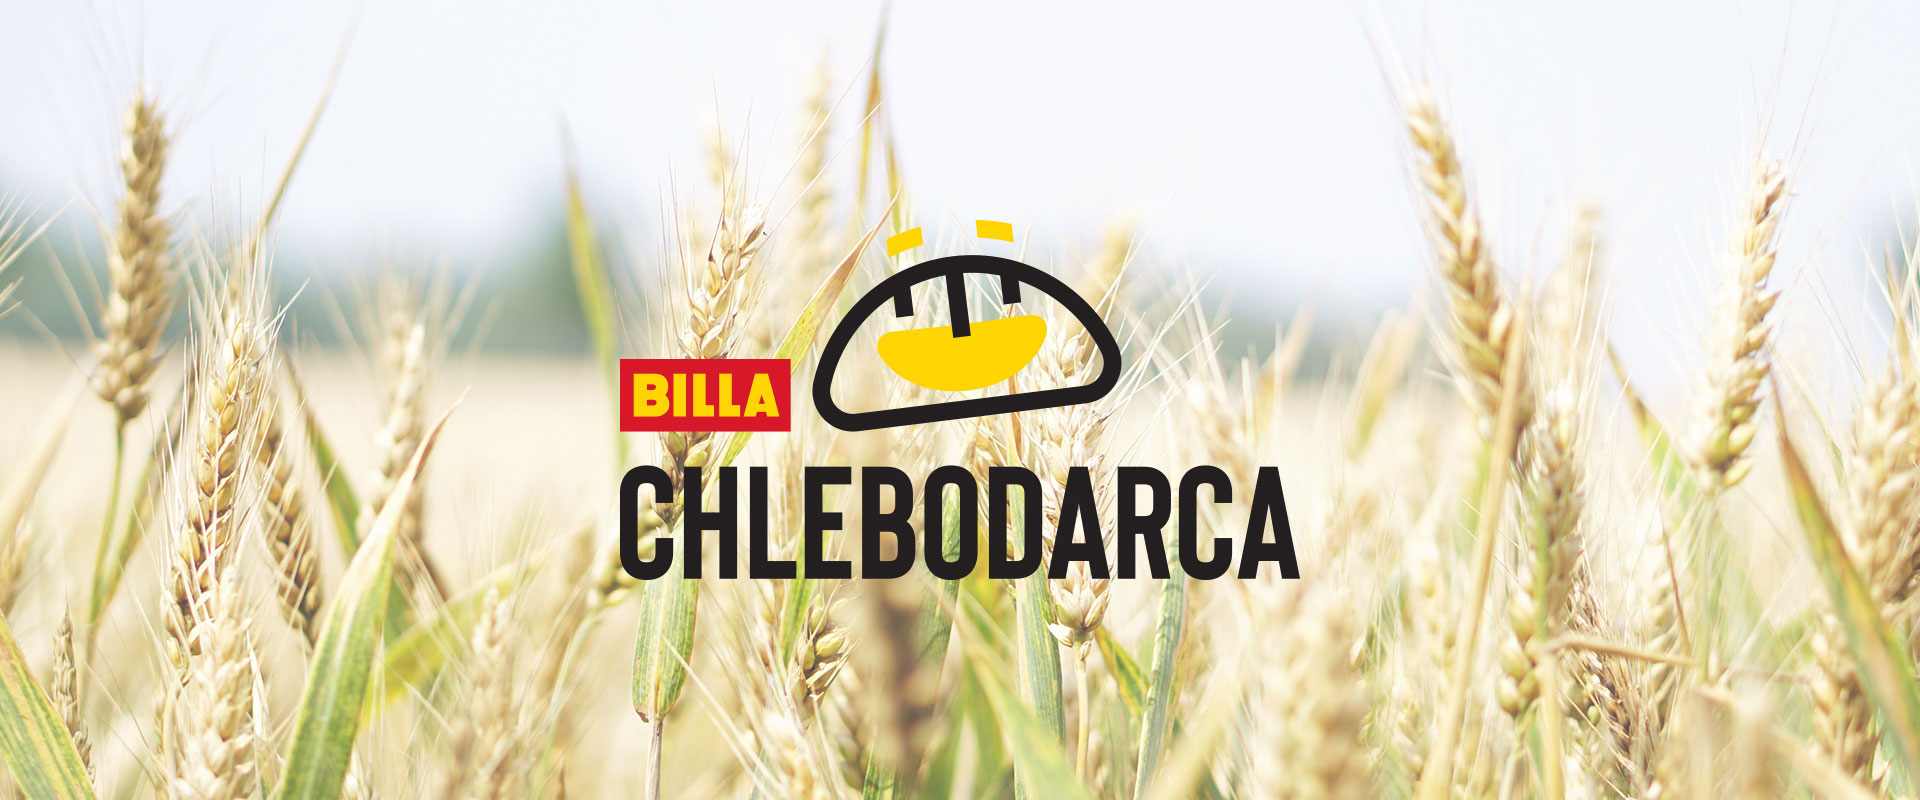 Billa chlebodarca dobročinný projekt logo kreativa a design